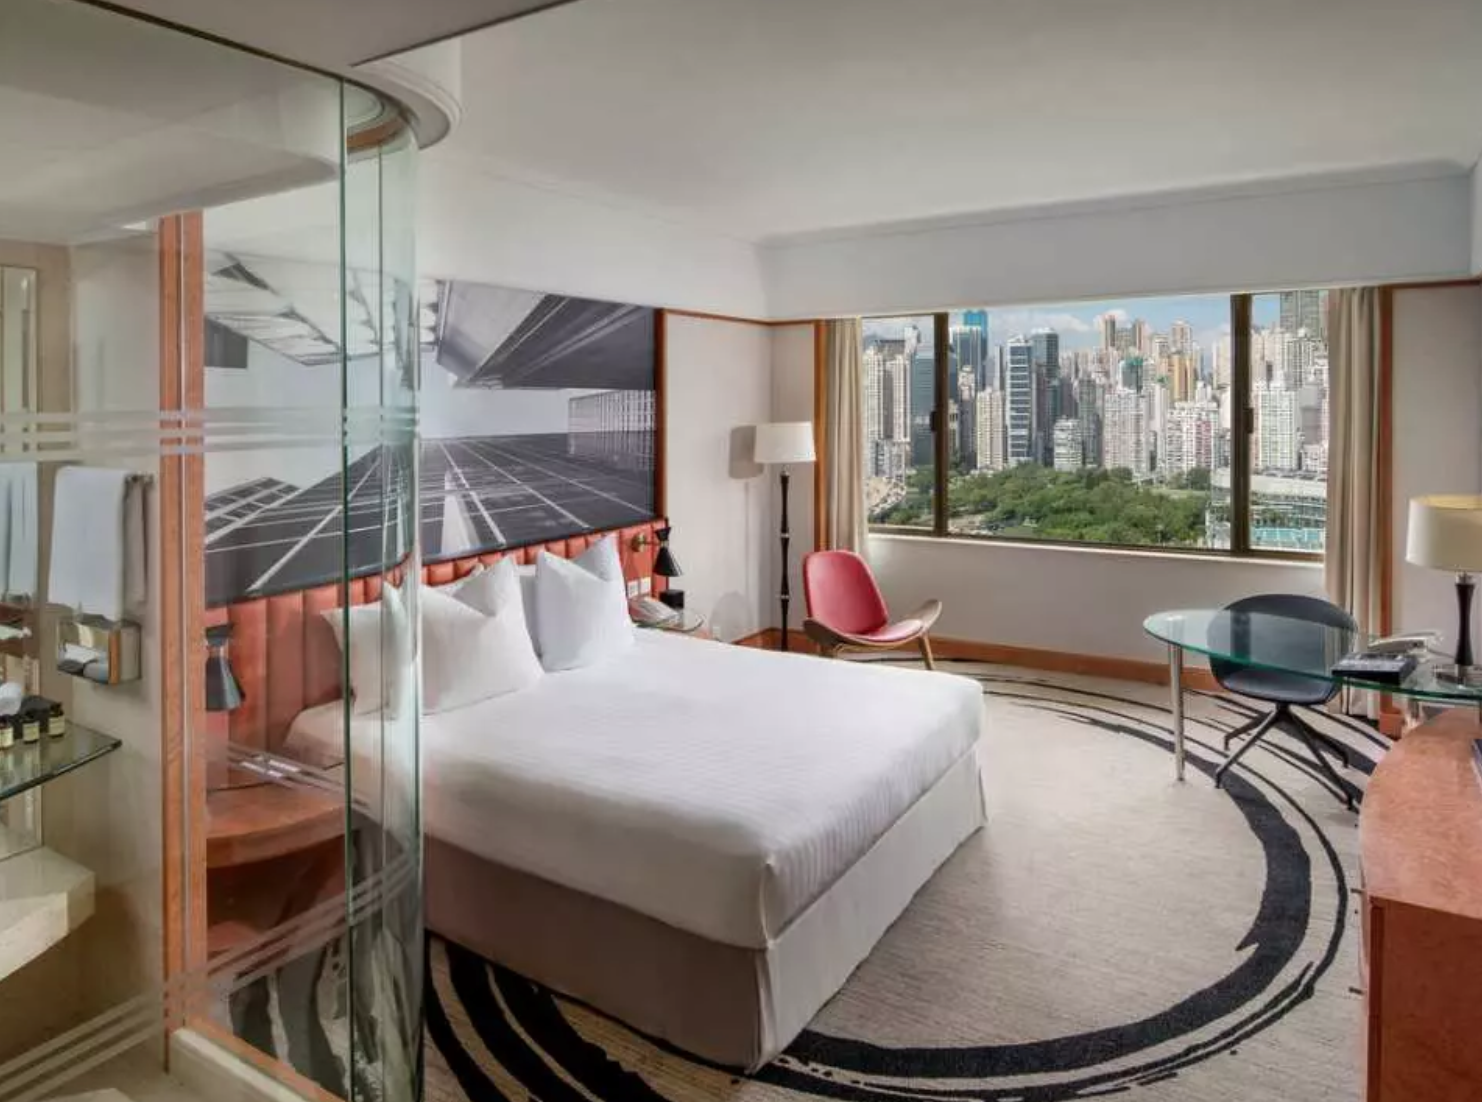 香港柏寧酒店 The Park Lane Hong Kong a Pullman Hotel-尊貴豪華客房(Premium Deluxe Room)-staycation-酒店房間相片